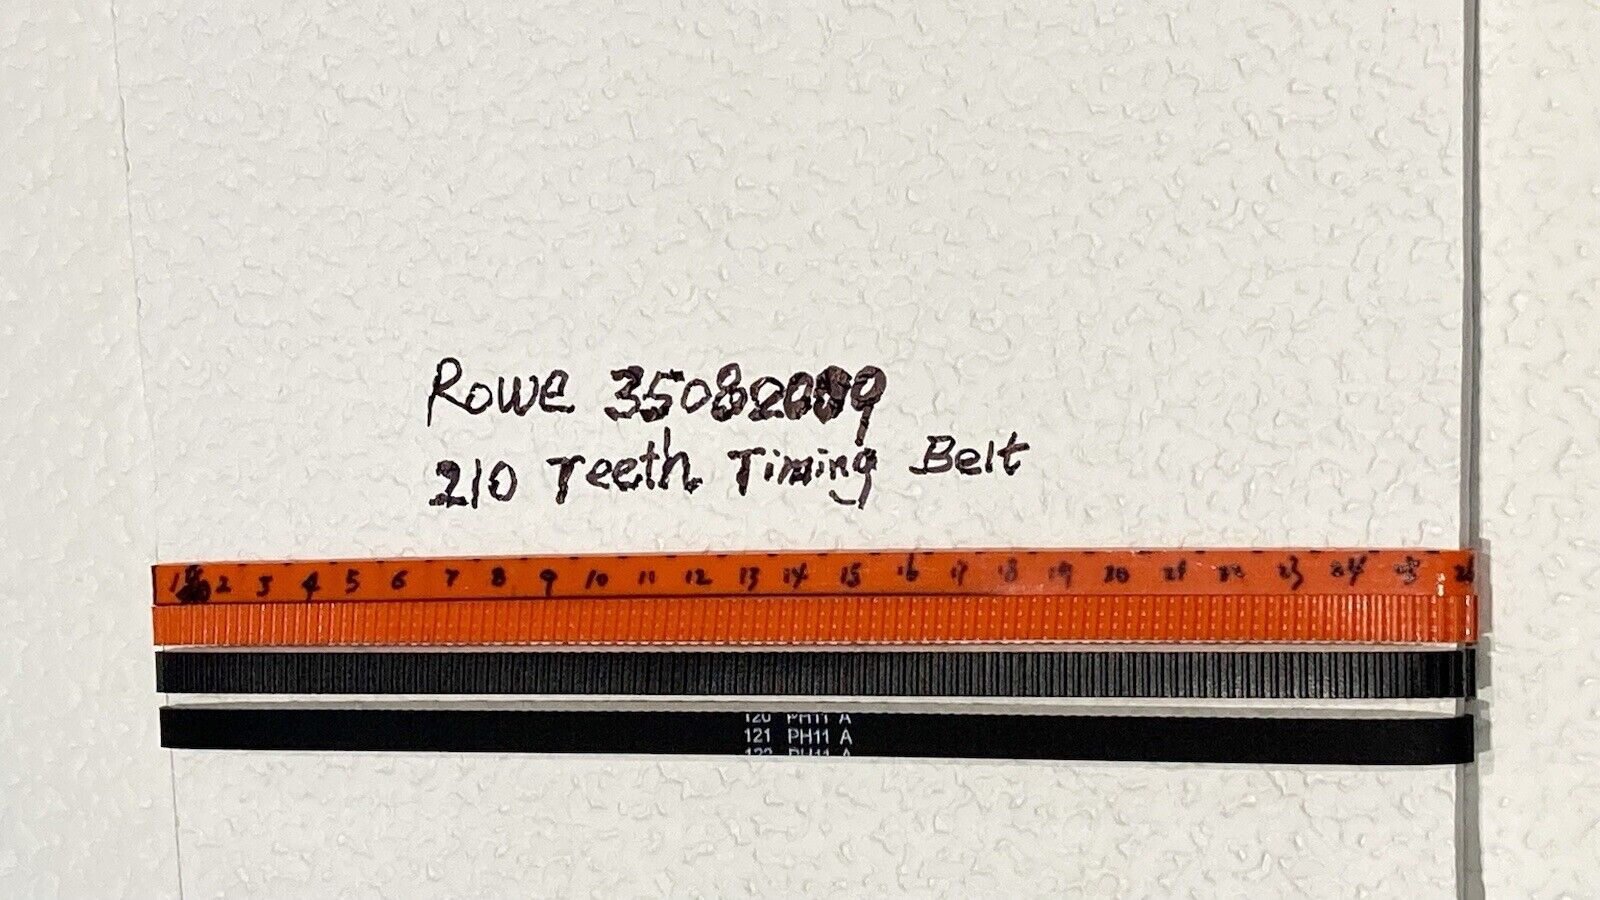 Rowe Bill Changer replacement belt 35082009, BA 50 Timing belts, 2pcs Black